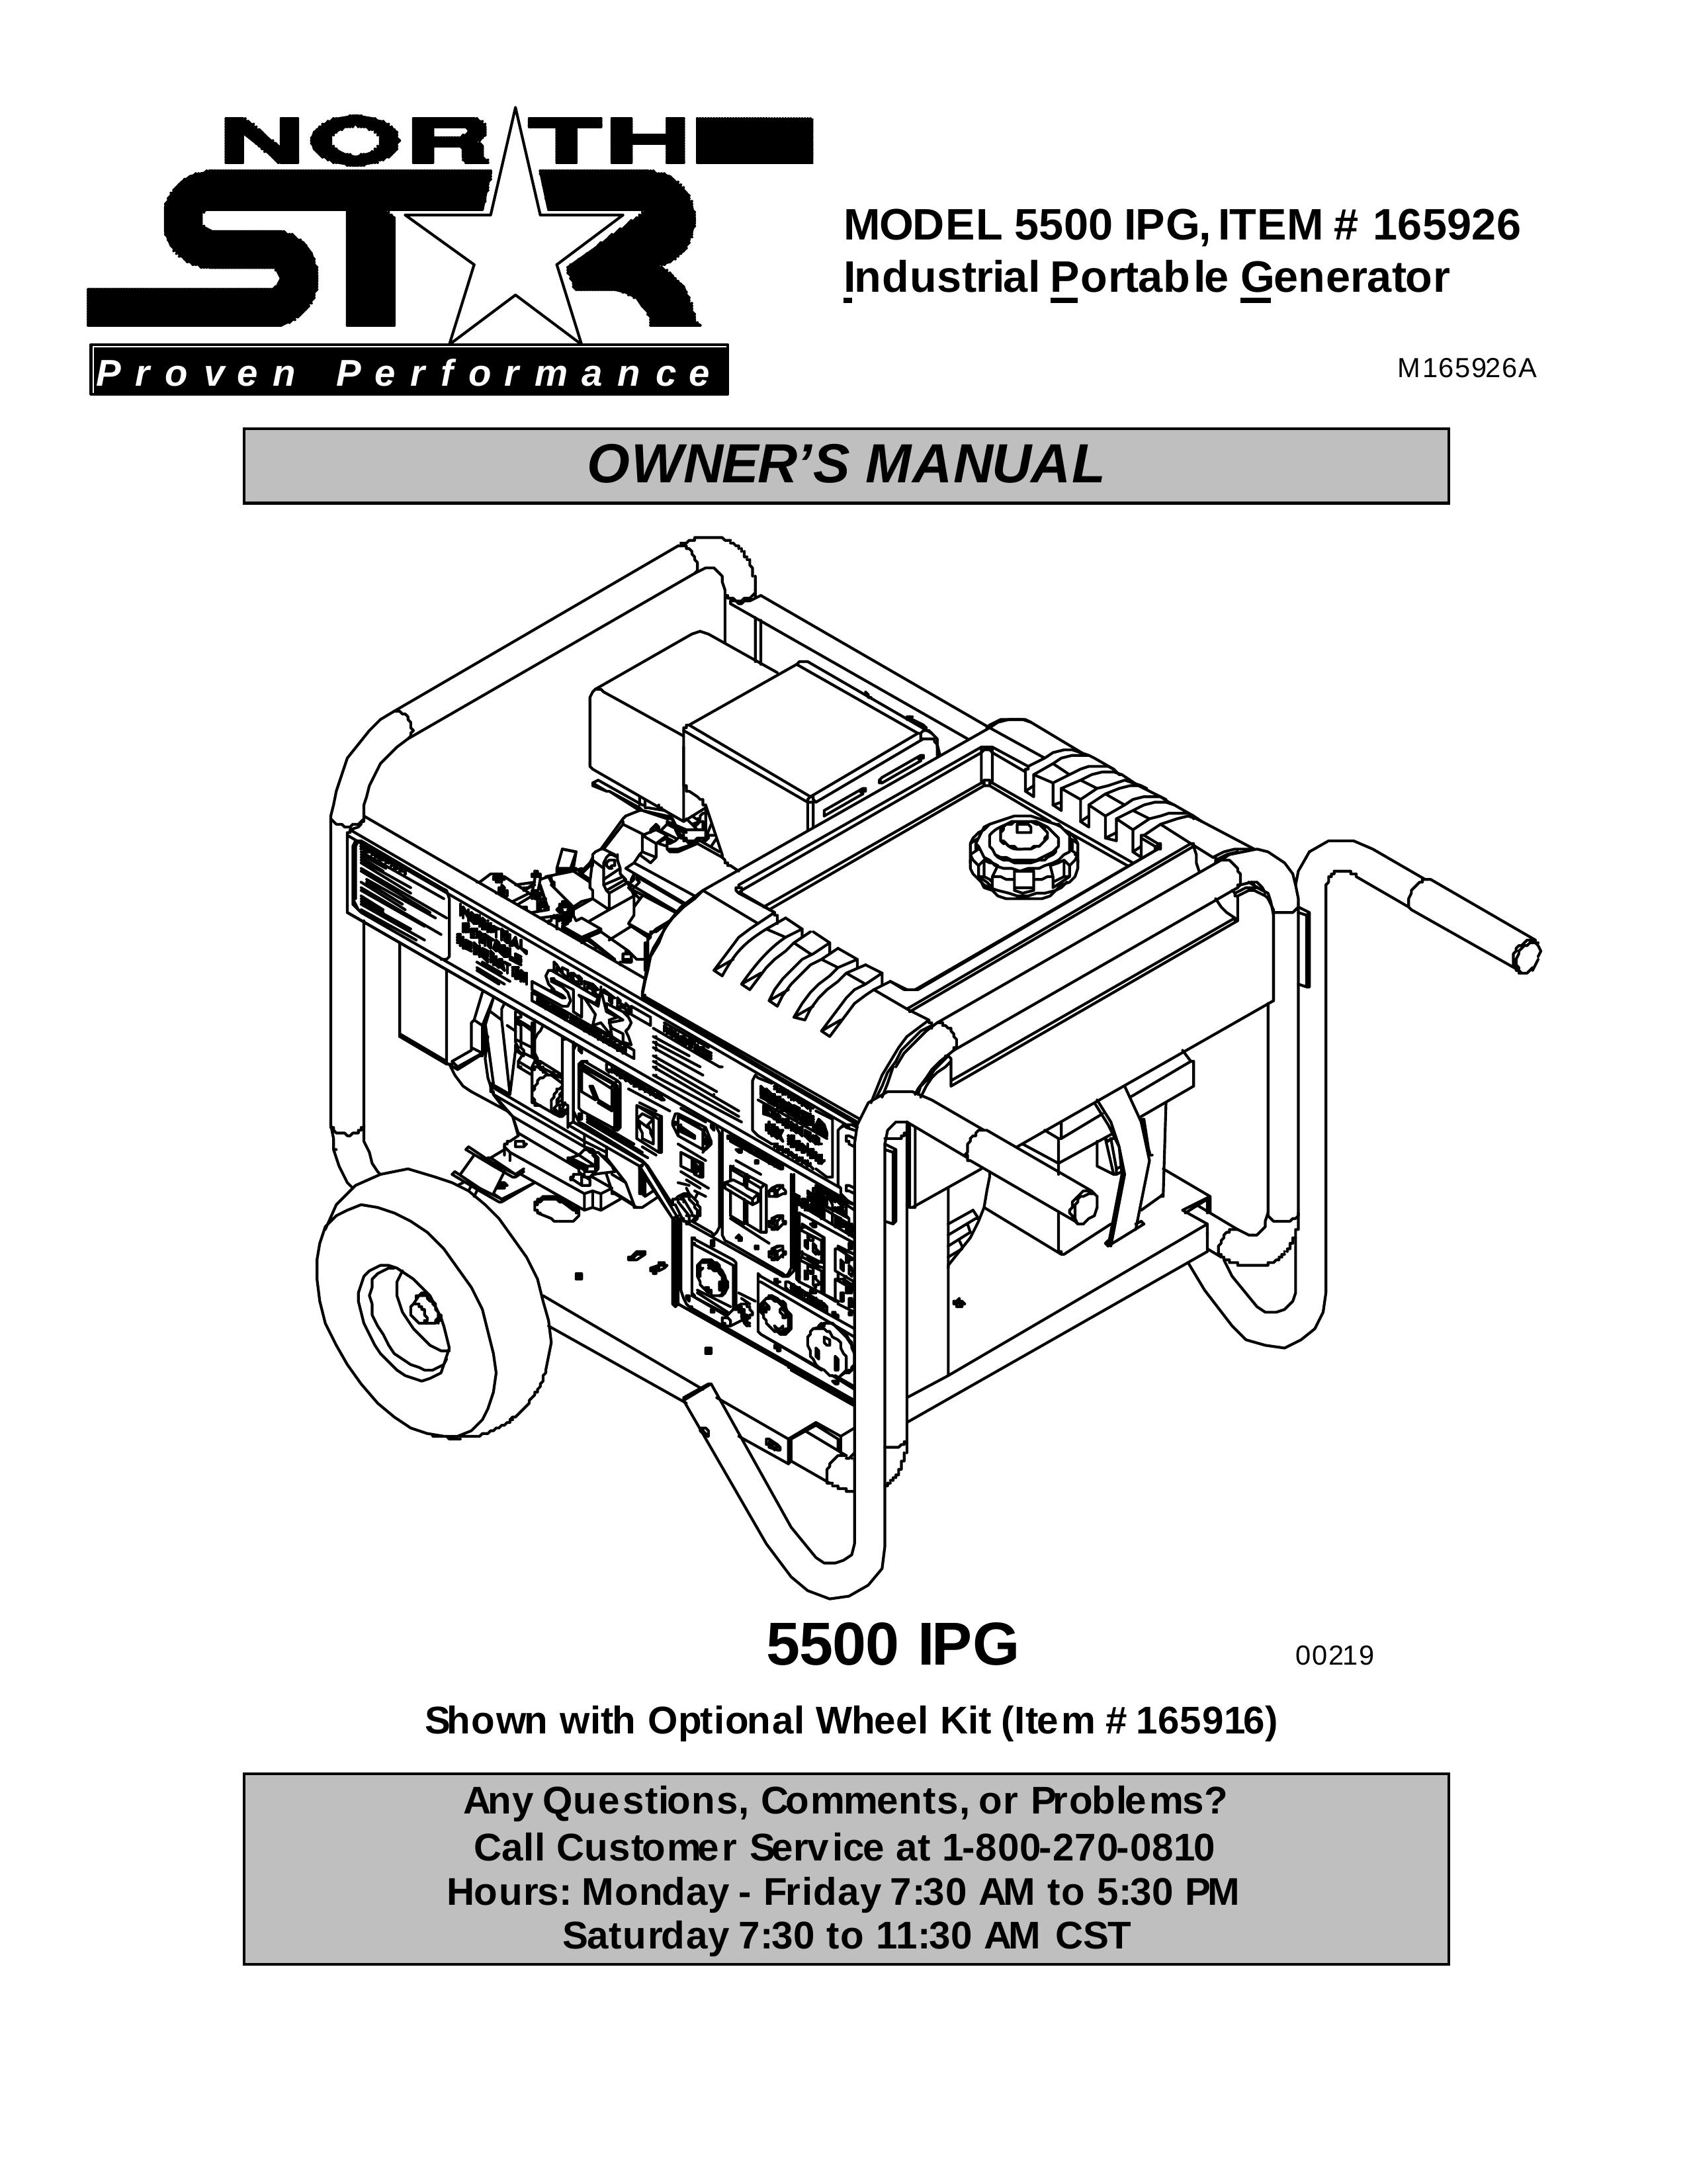 North Star 5500 IPG Portable Generator User Manual